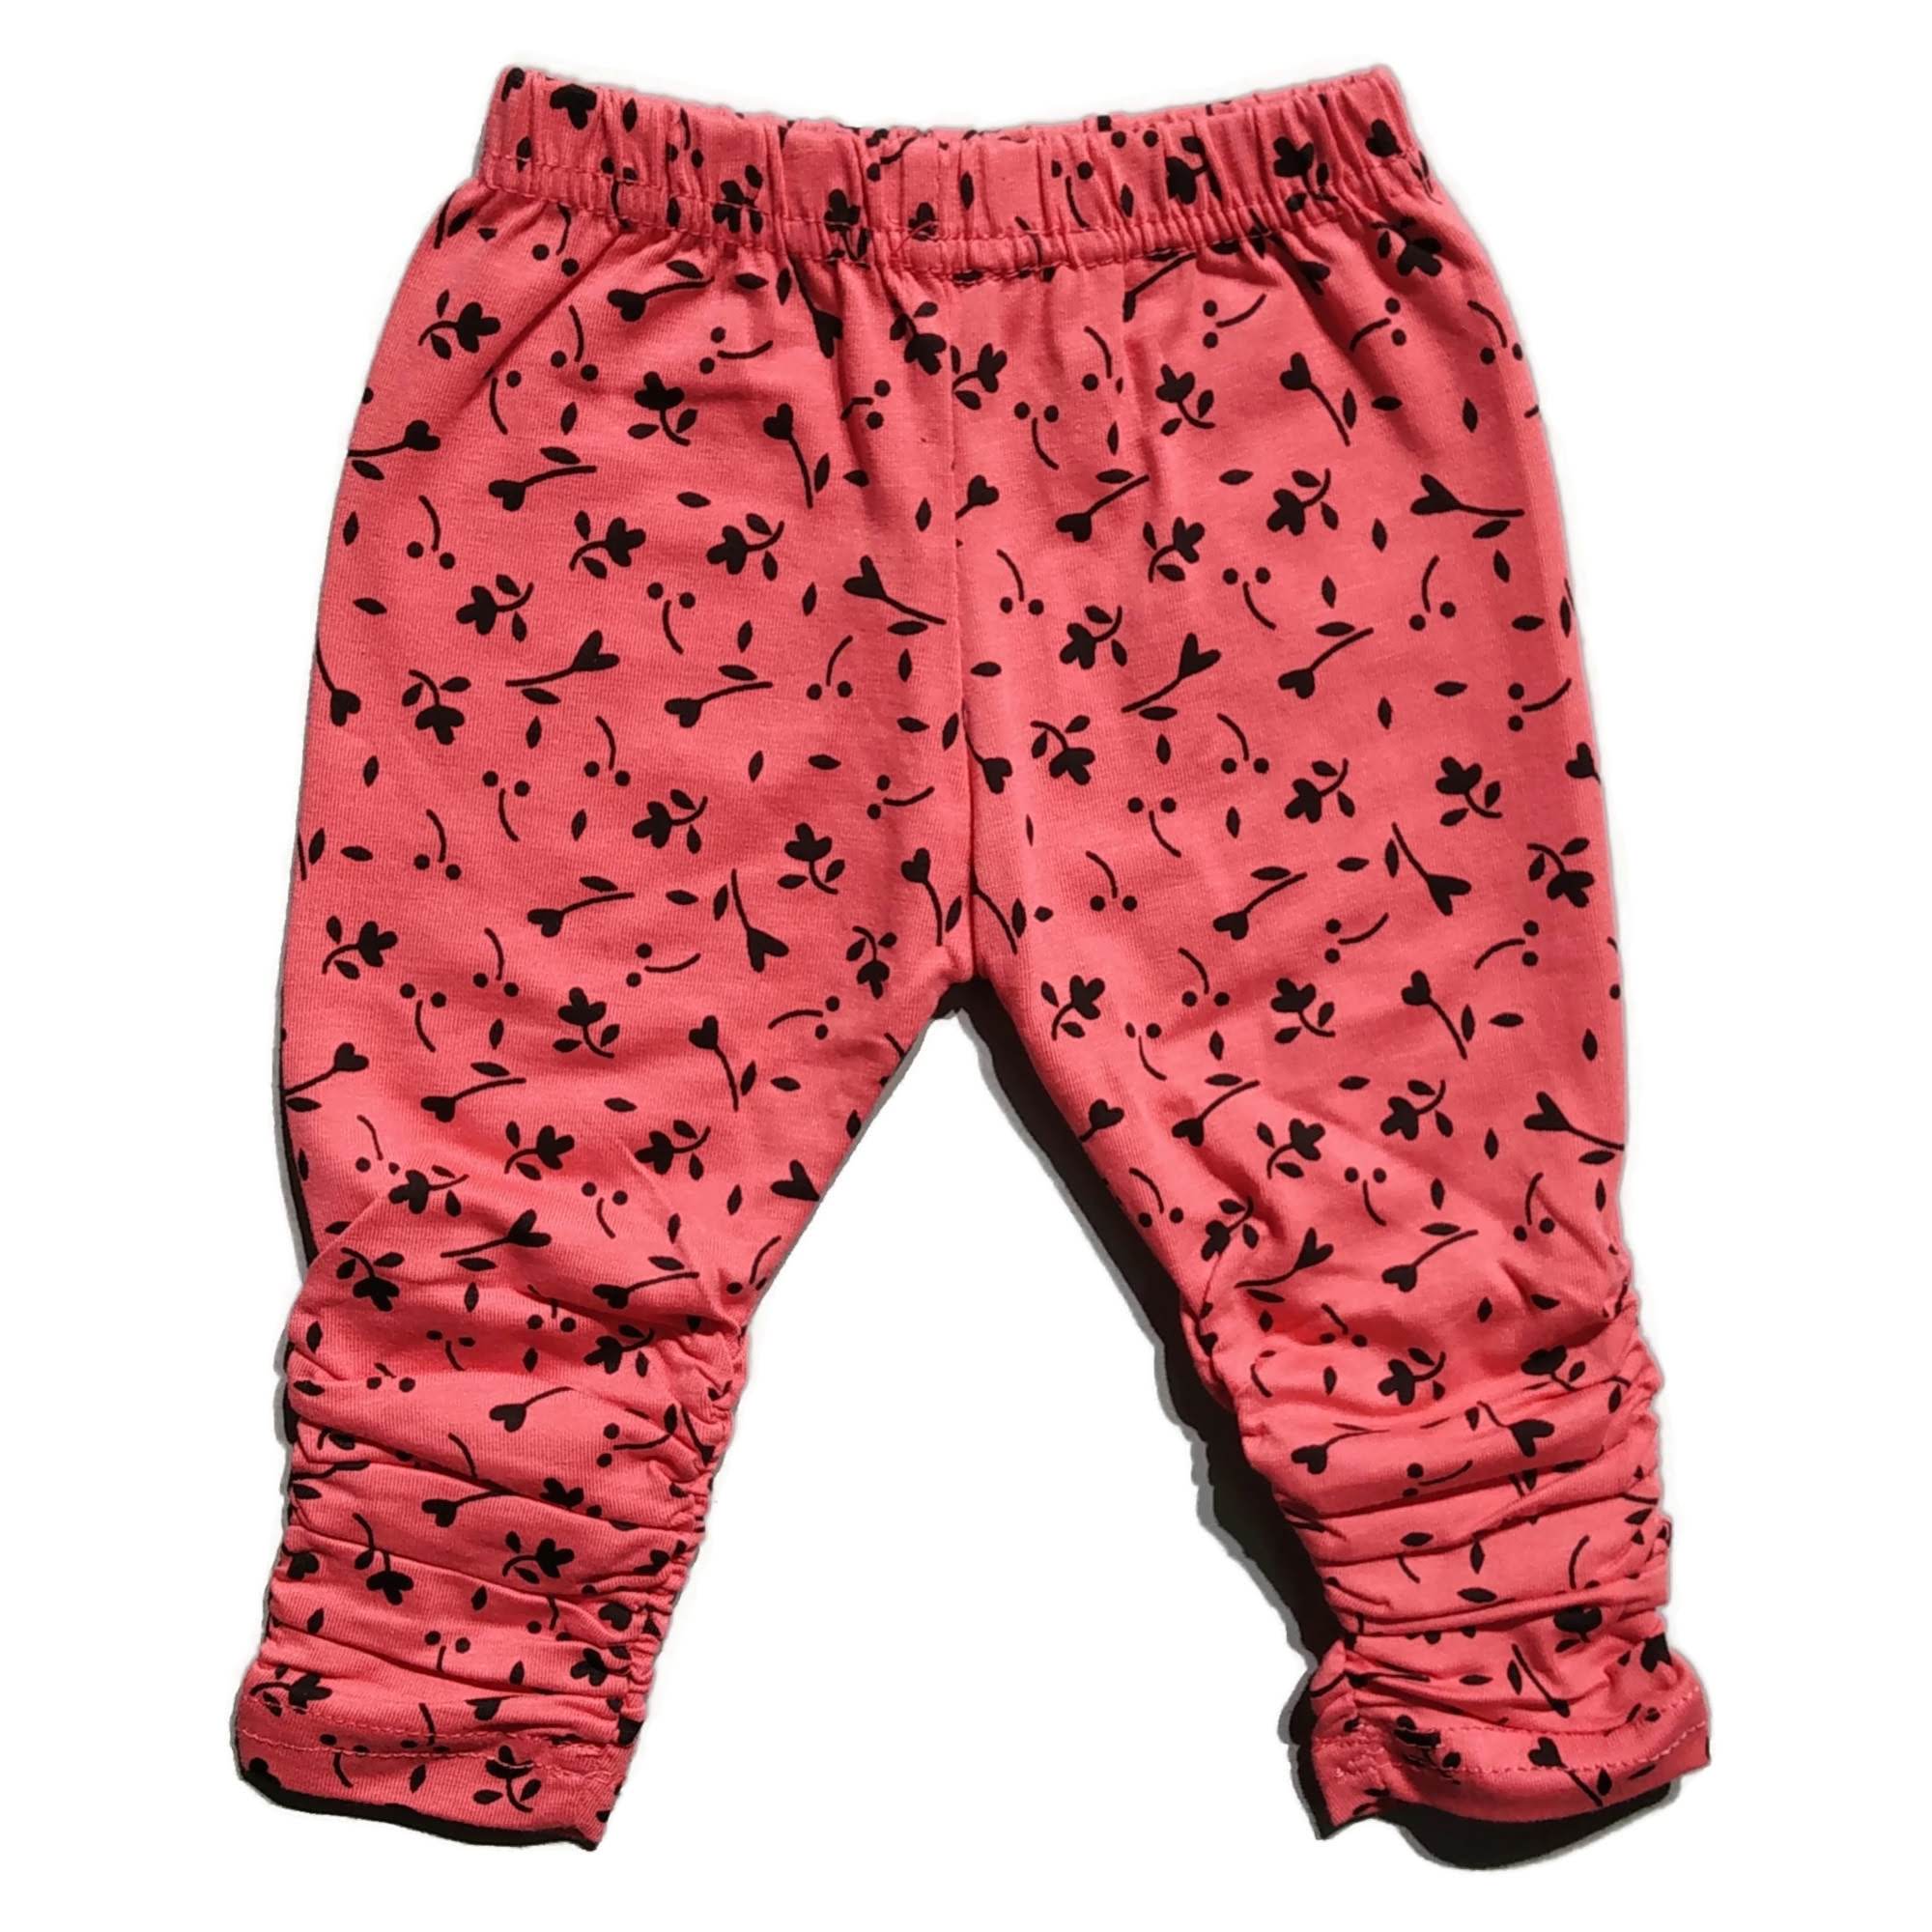 Capris for Girls Buy Capri Pants for Baby Girl Online at Best Price   Jockey India